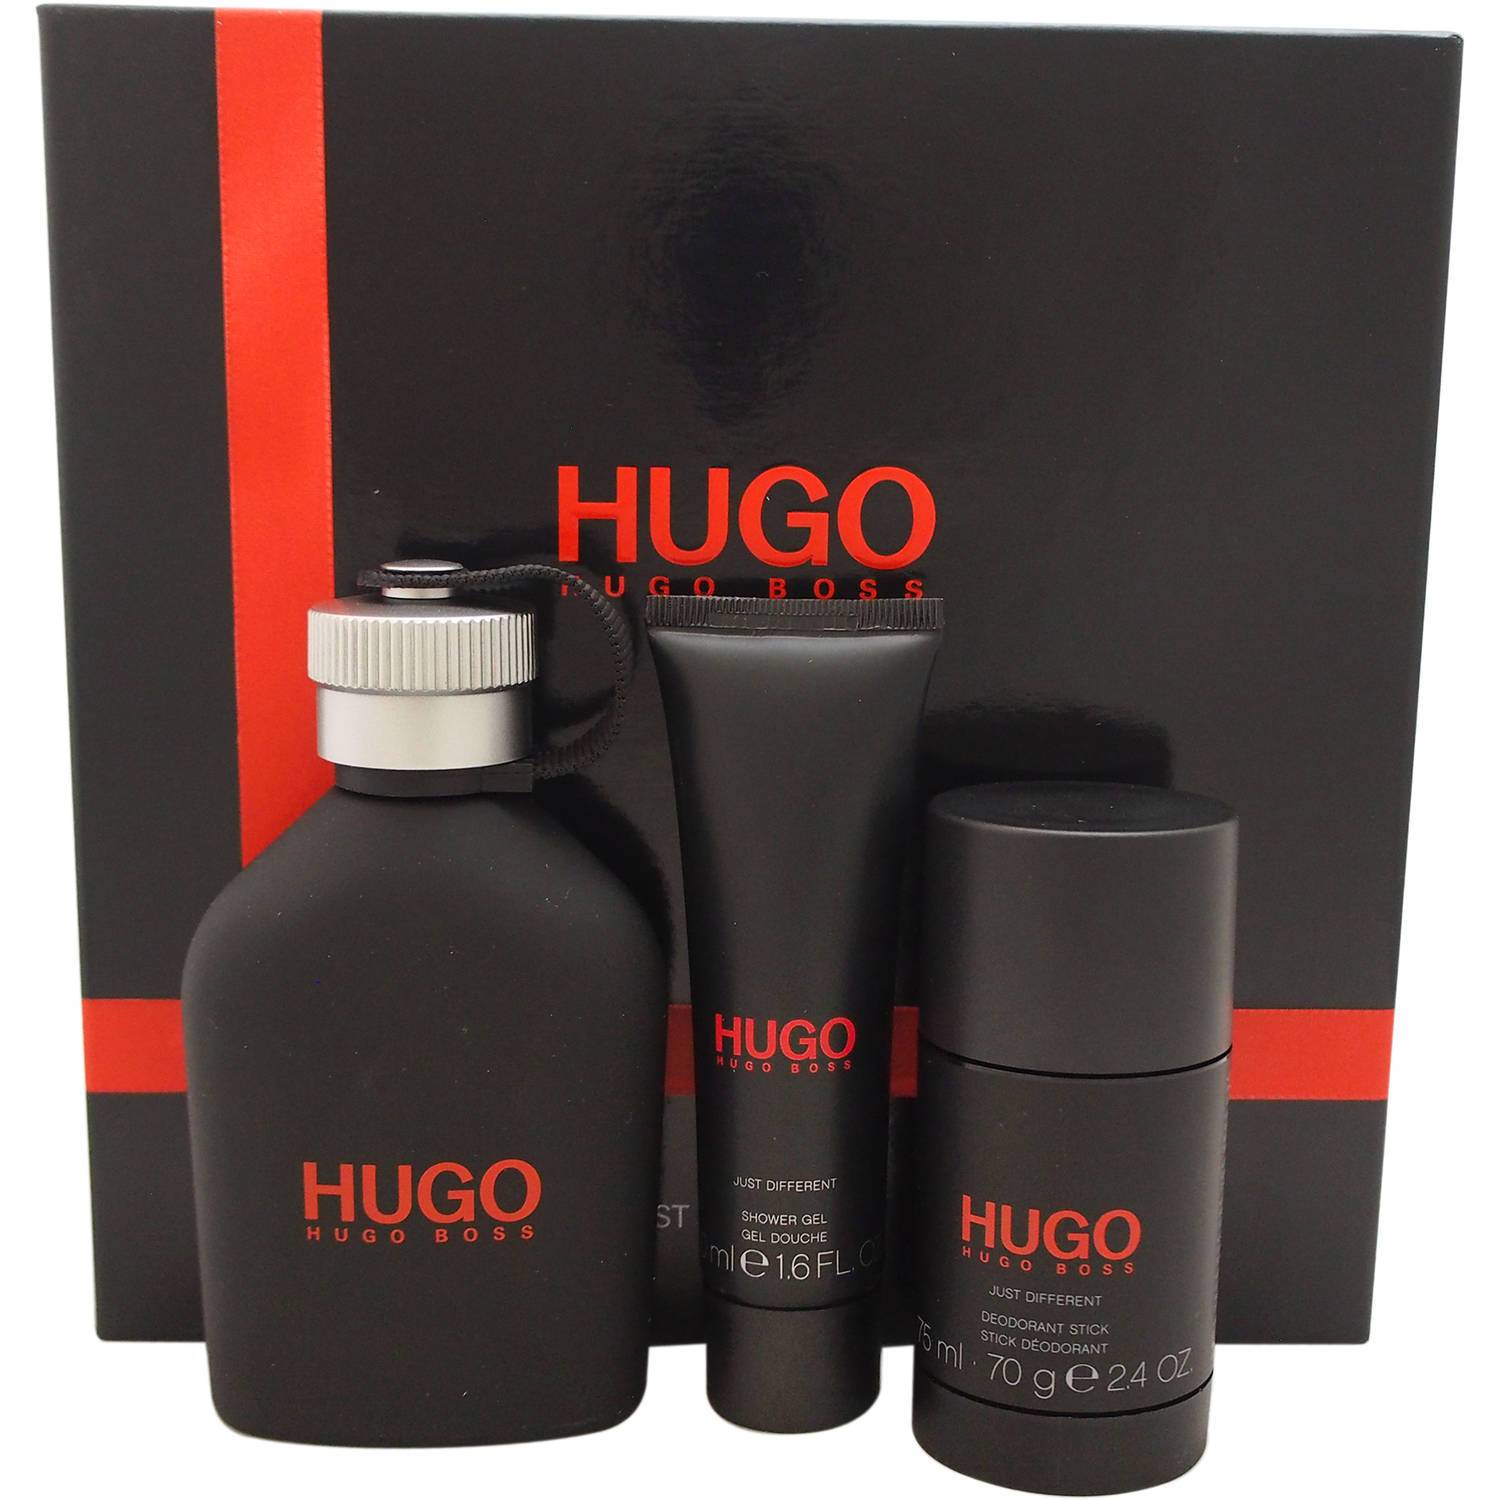 Hugo Boss Just Different by Hugo Boss Men 3 Piece Gift Set (4.2 oz Eau de Toilette + 1.6 oz Shower Gel + 2.4 oz Deo Stick) | FragranceBaba.com